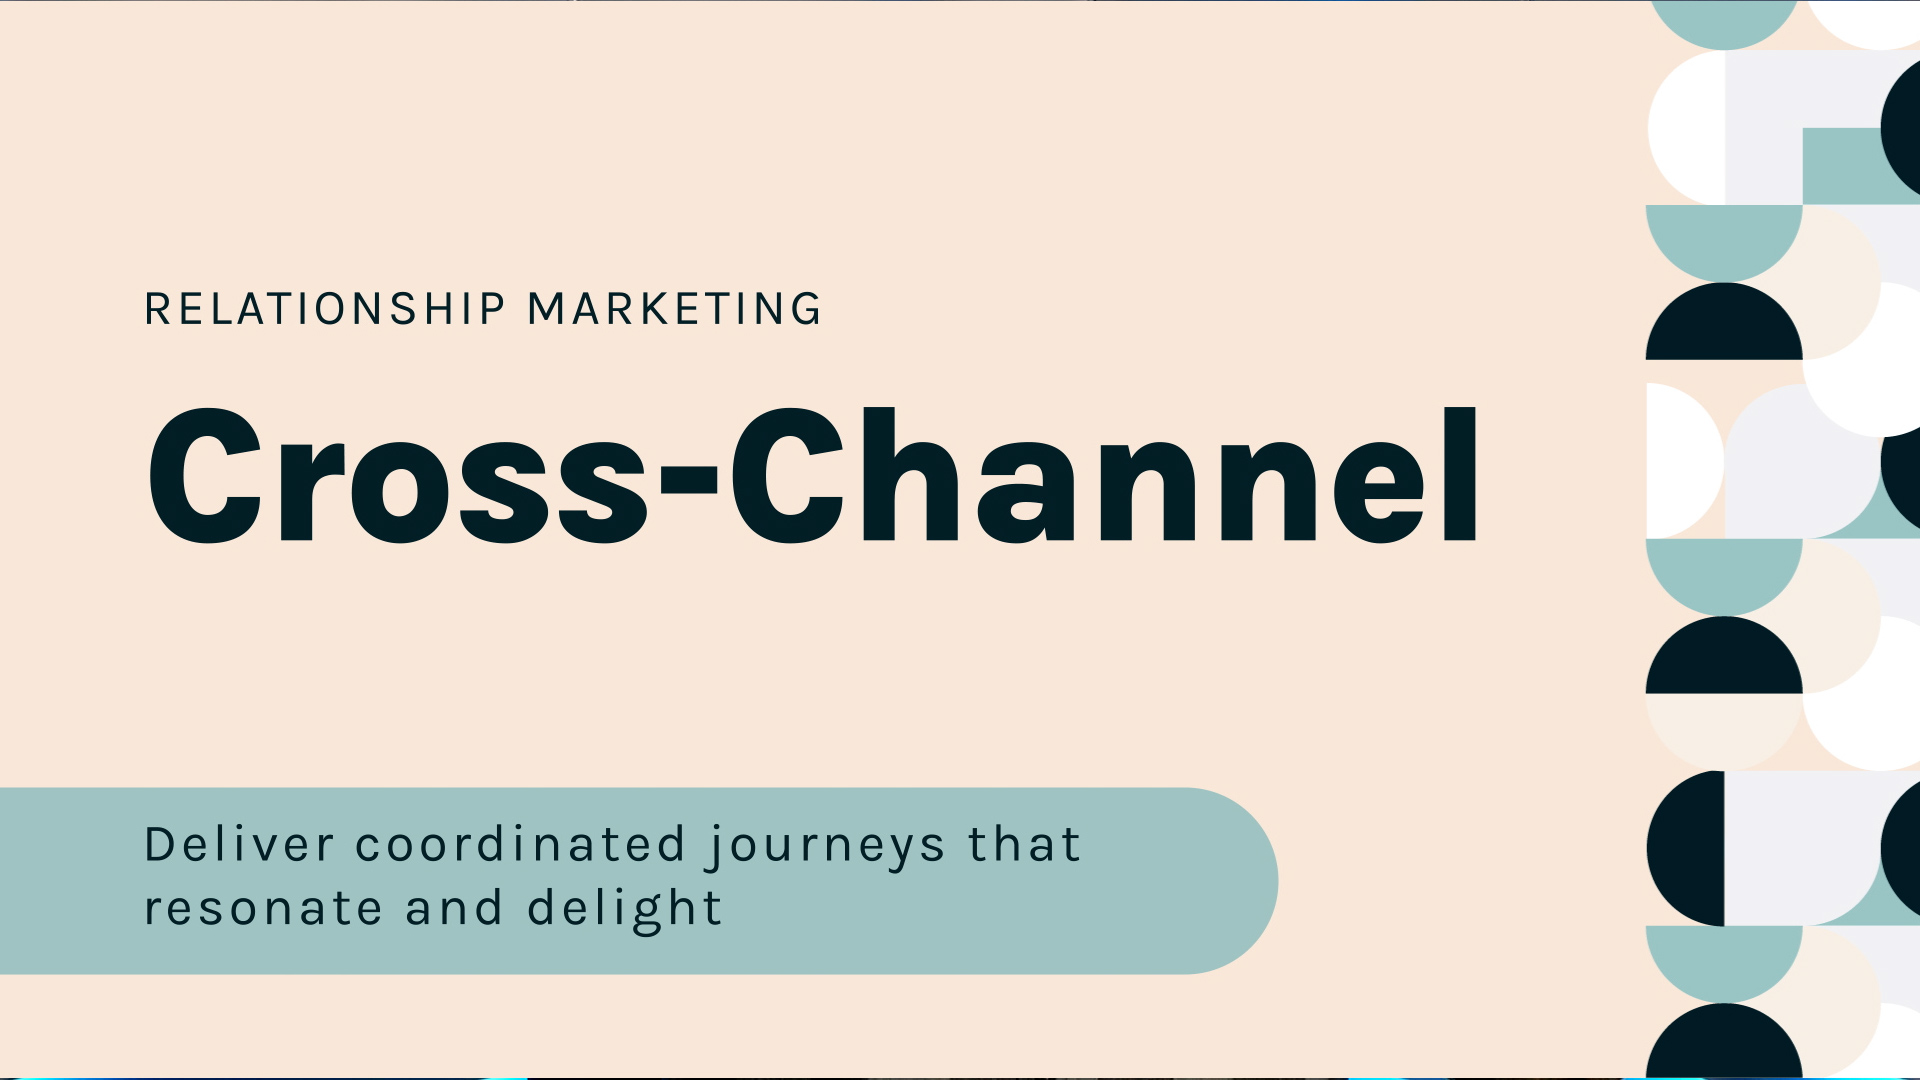 Cross-Channel Marketing: Relationship Marketing Use Case